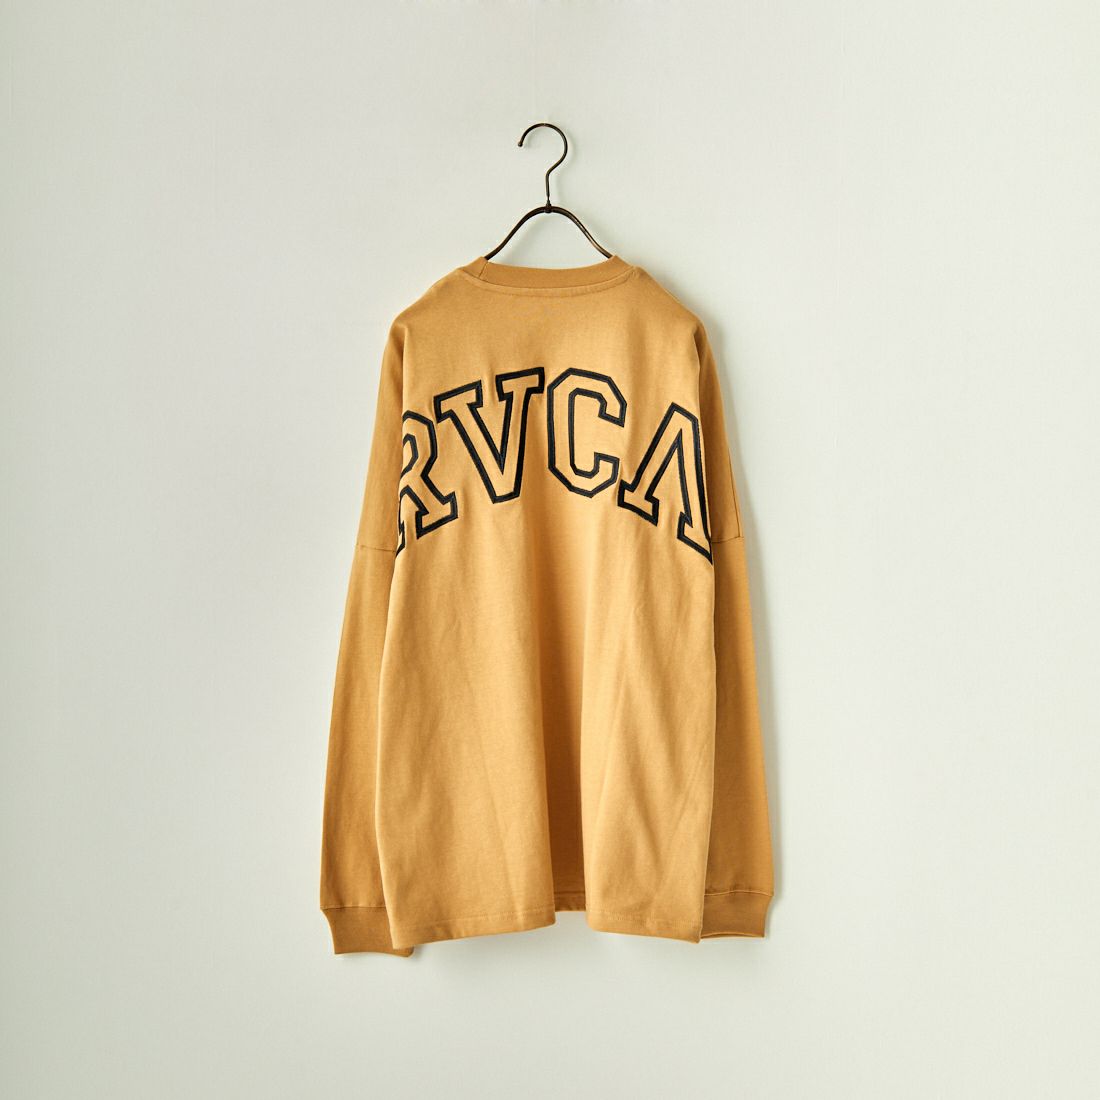 RVCA [ルーカ] ARCHED FAKE RVCA ロングスリーブTシャツ [BD044-065